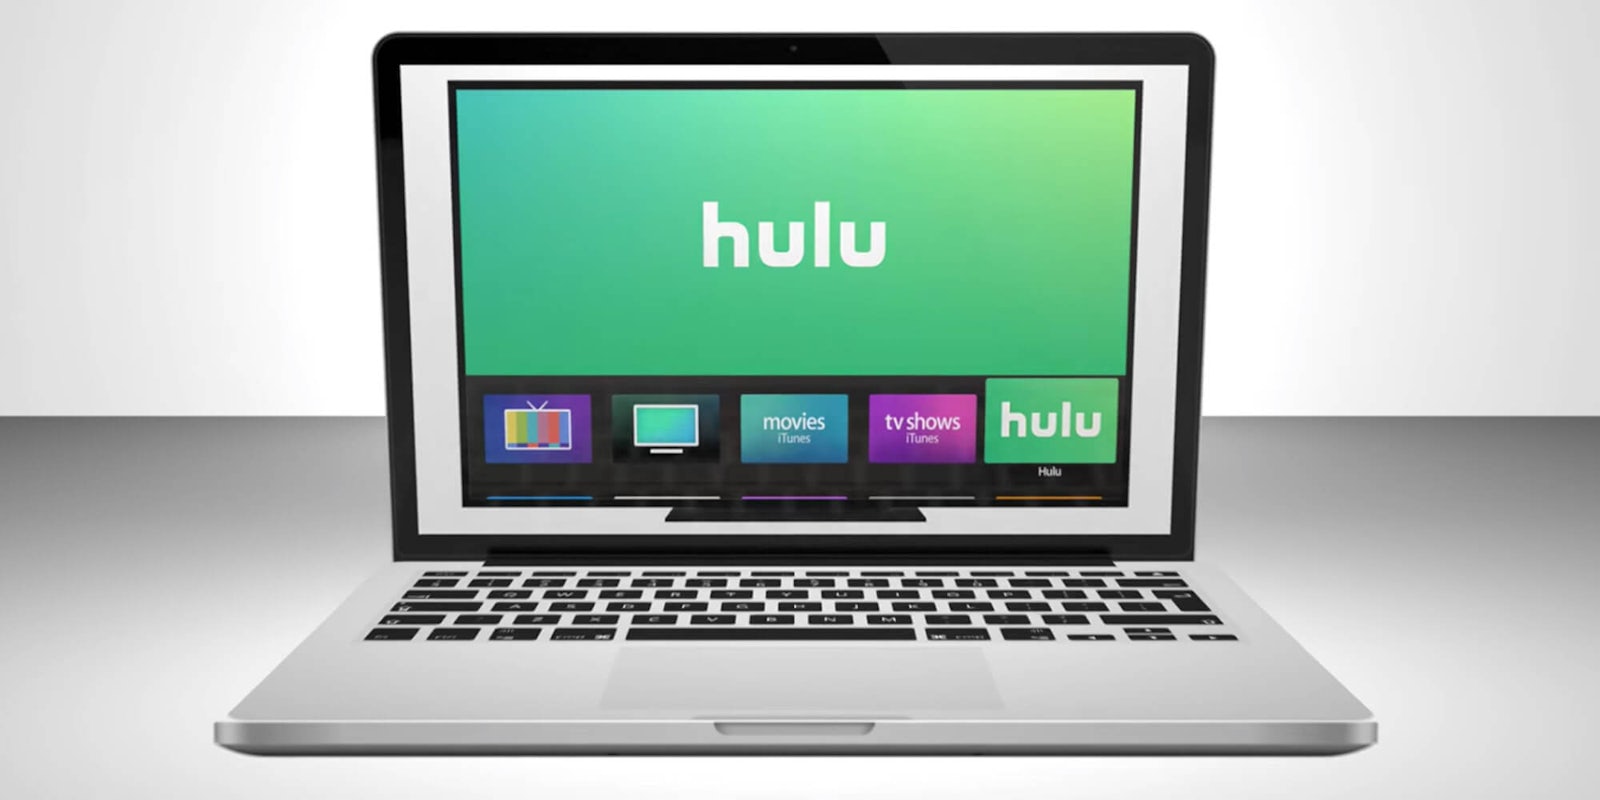 A Macbook with Hulu on the screen